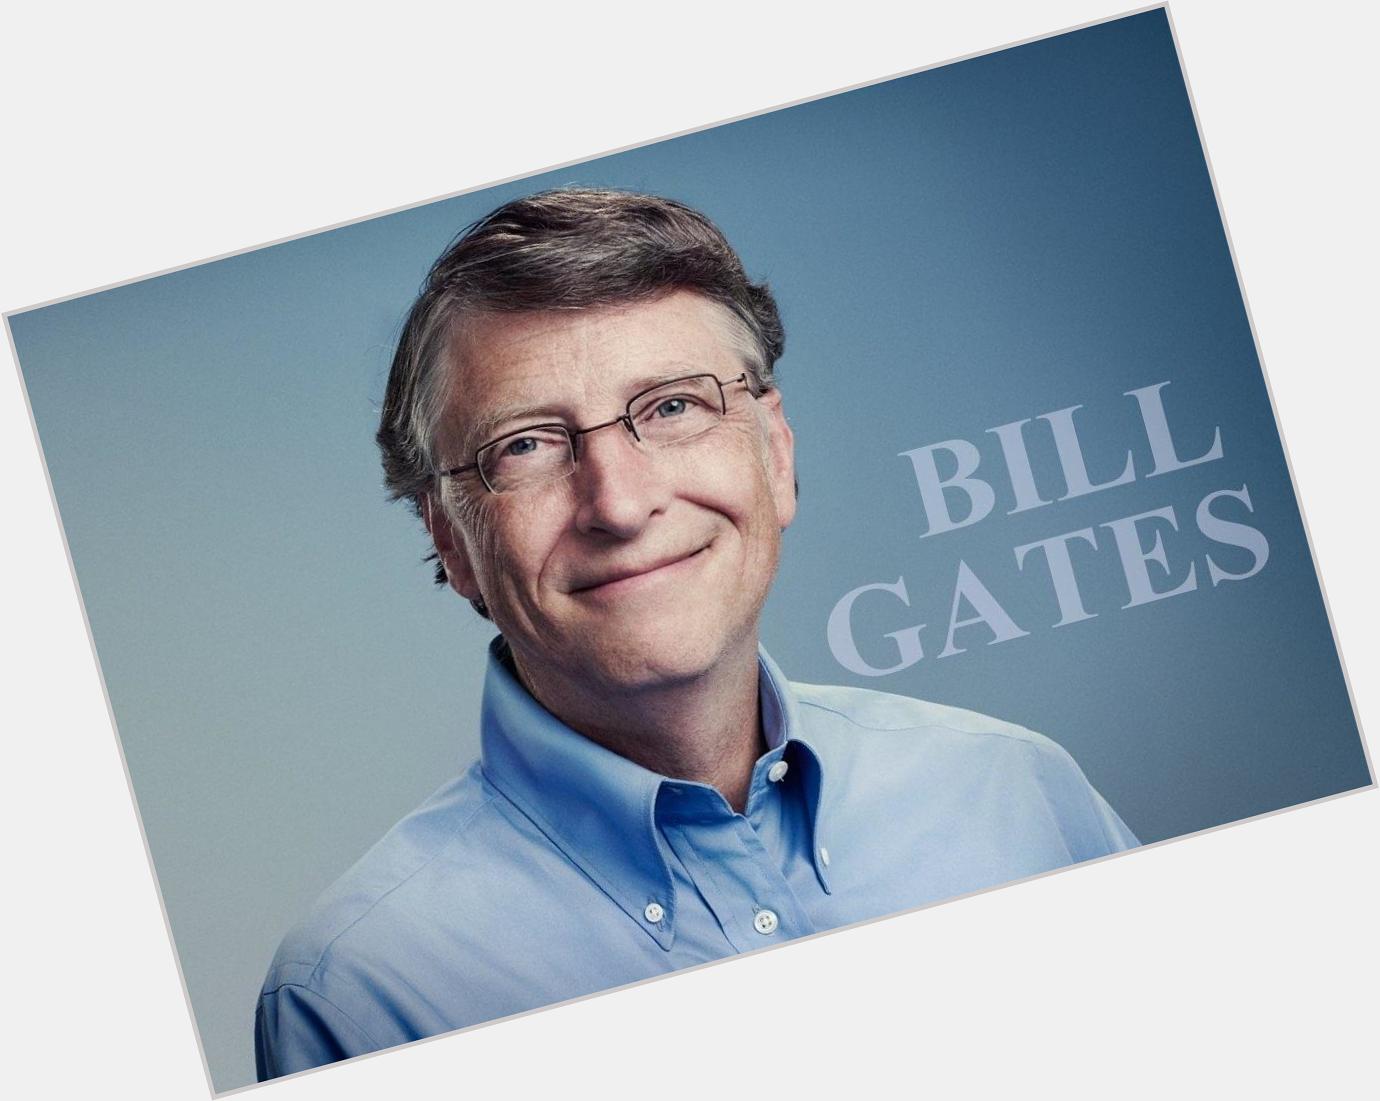 Happy birthday, Bill Gates (60 years old)! 